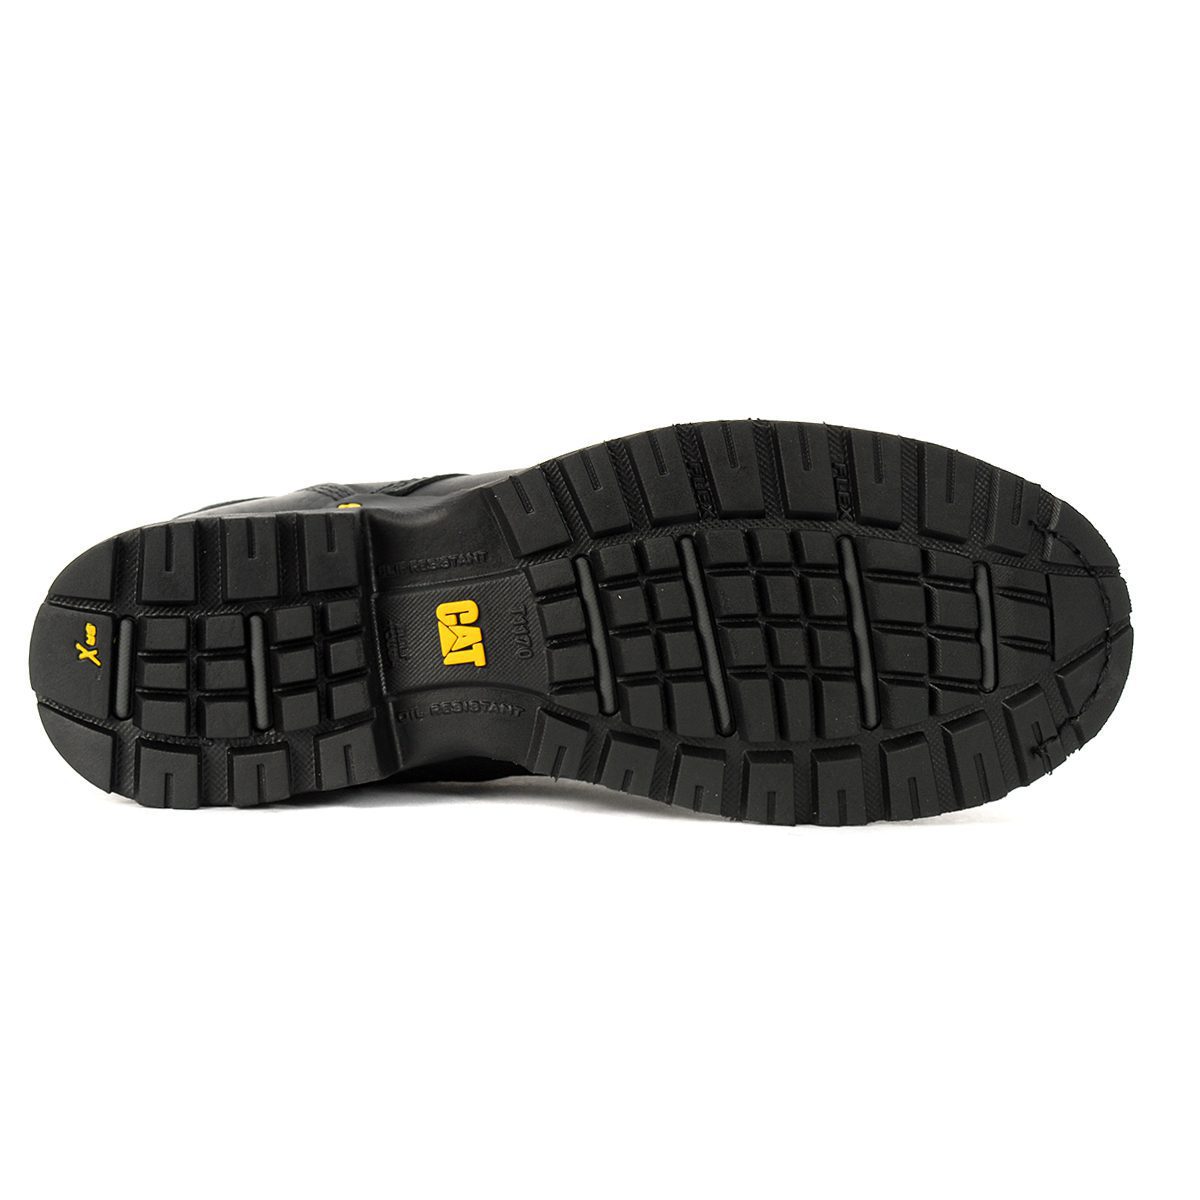 11 M US Caterpillar Footwear Women/'s Paisley 6 ST CSA Safety Boot Black